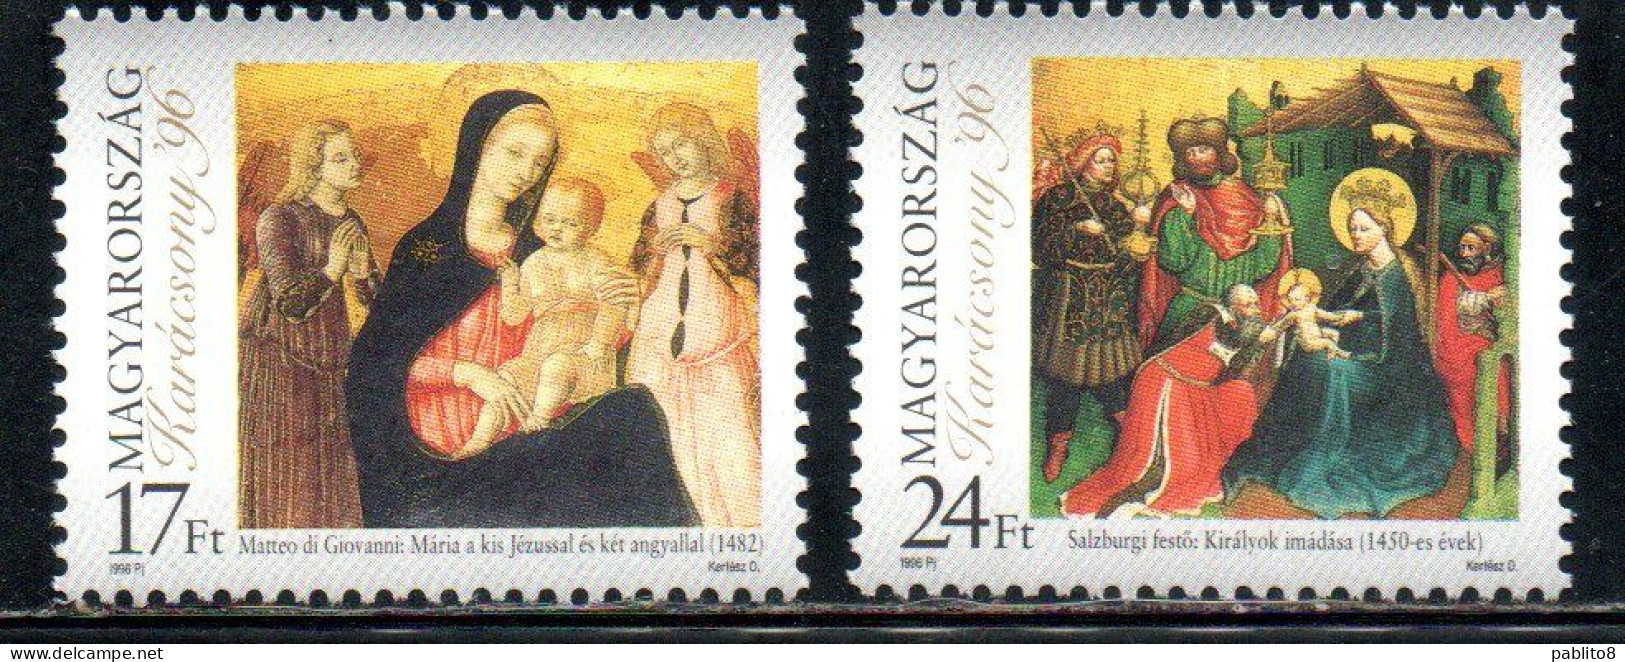 HUNGARY UNGHERIA MAGYAR 1996 CHRISTMAS NATALE NOEL WEIHNACHTEN NAVIDAD COMPLETE SET SERIE COMPLETA MNH - Nuevos